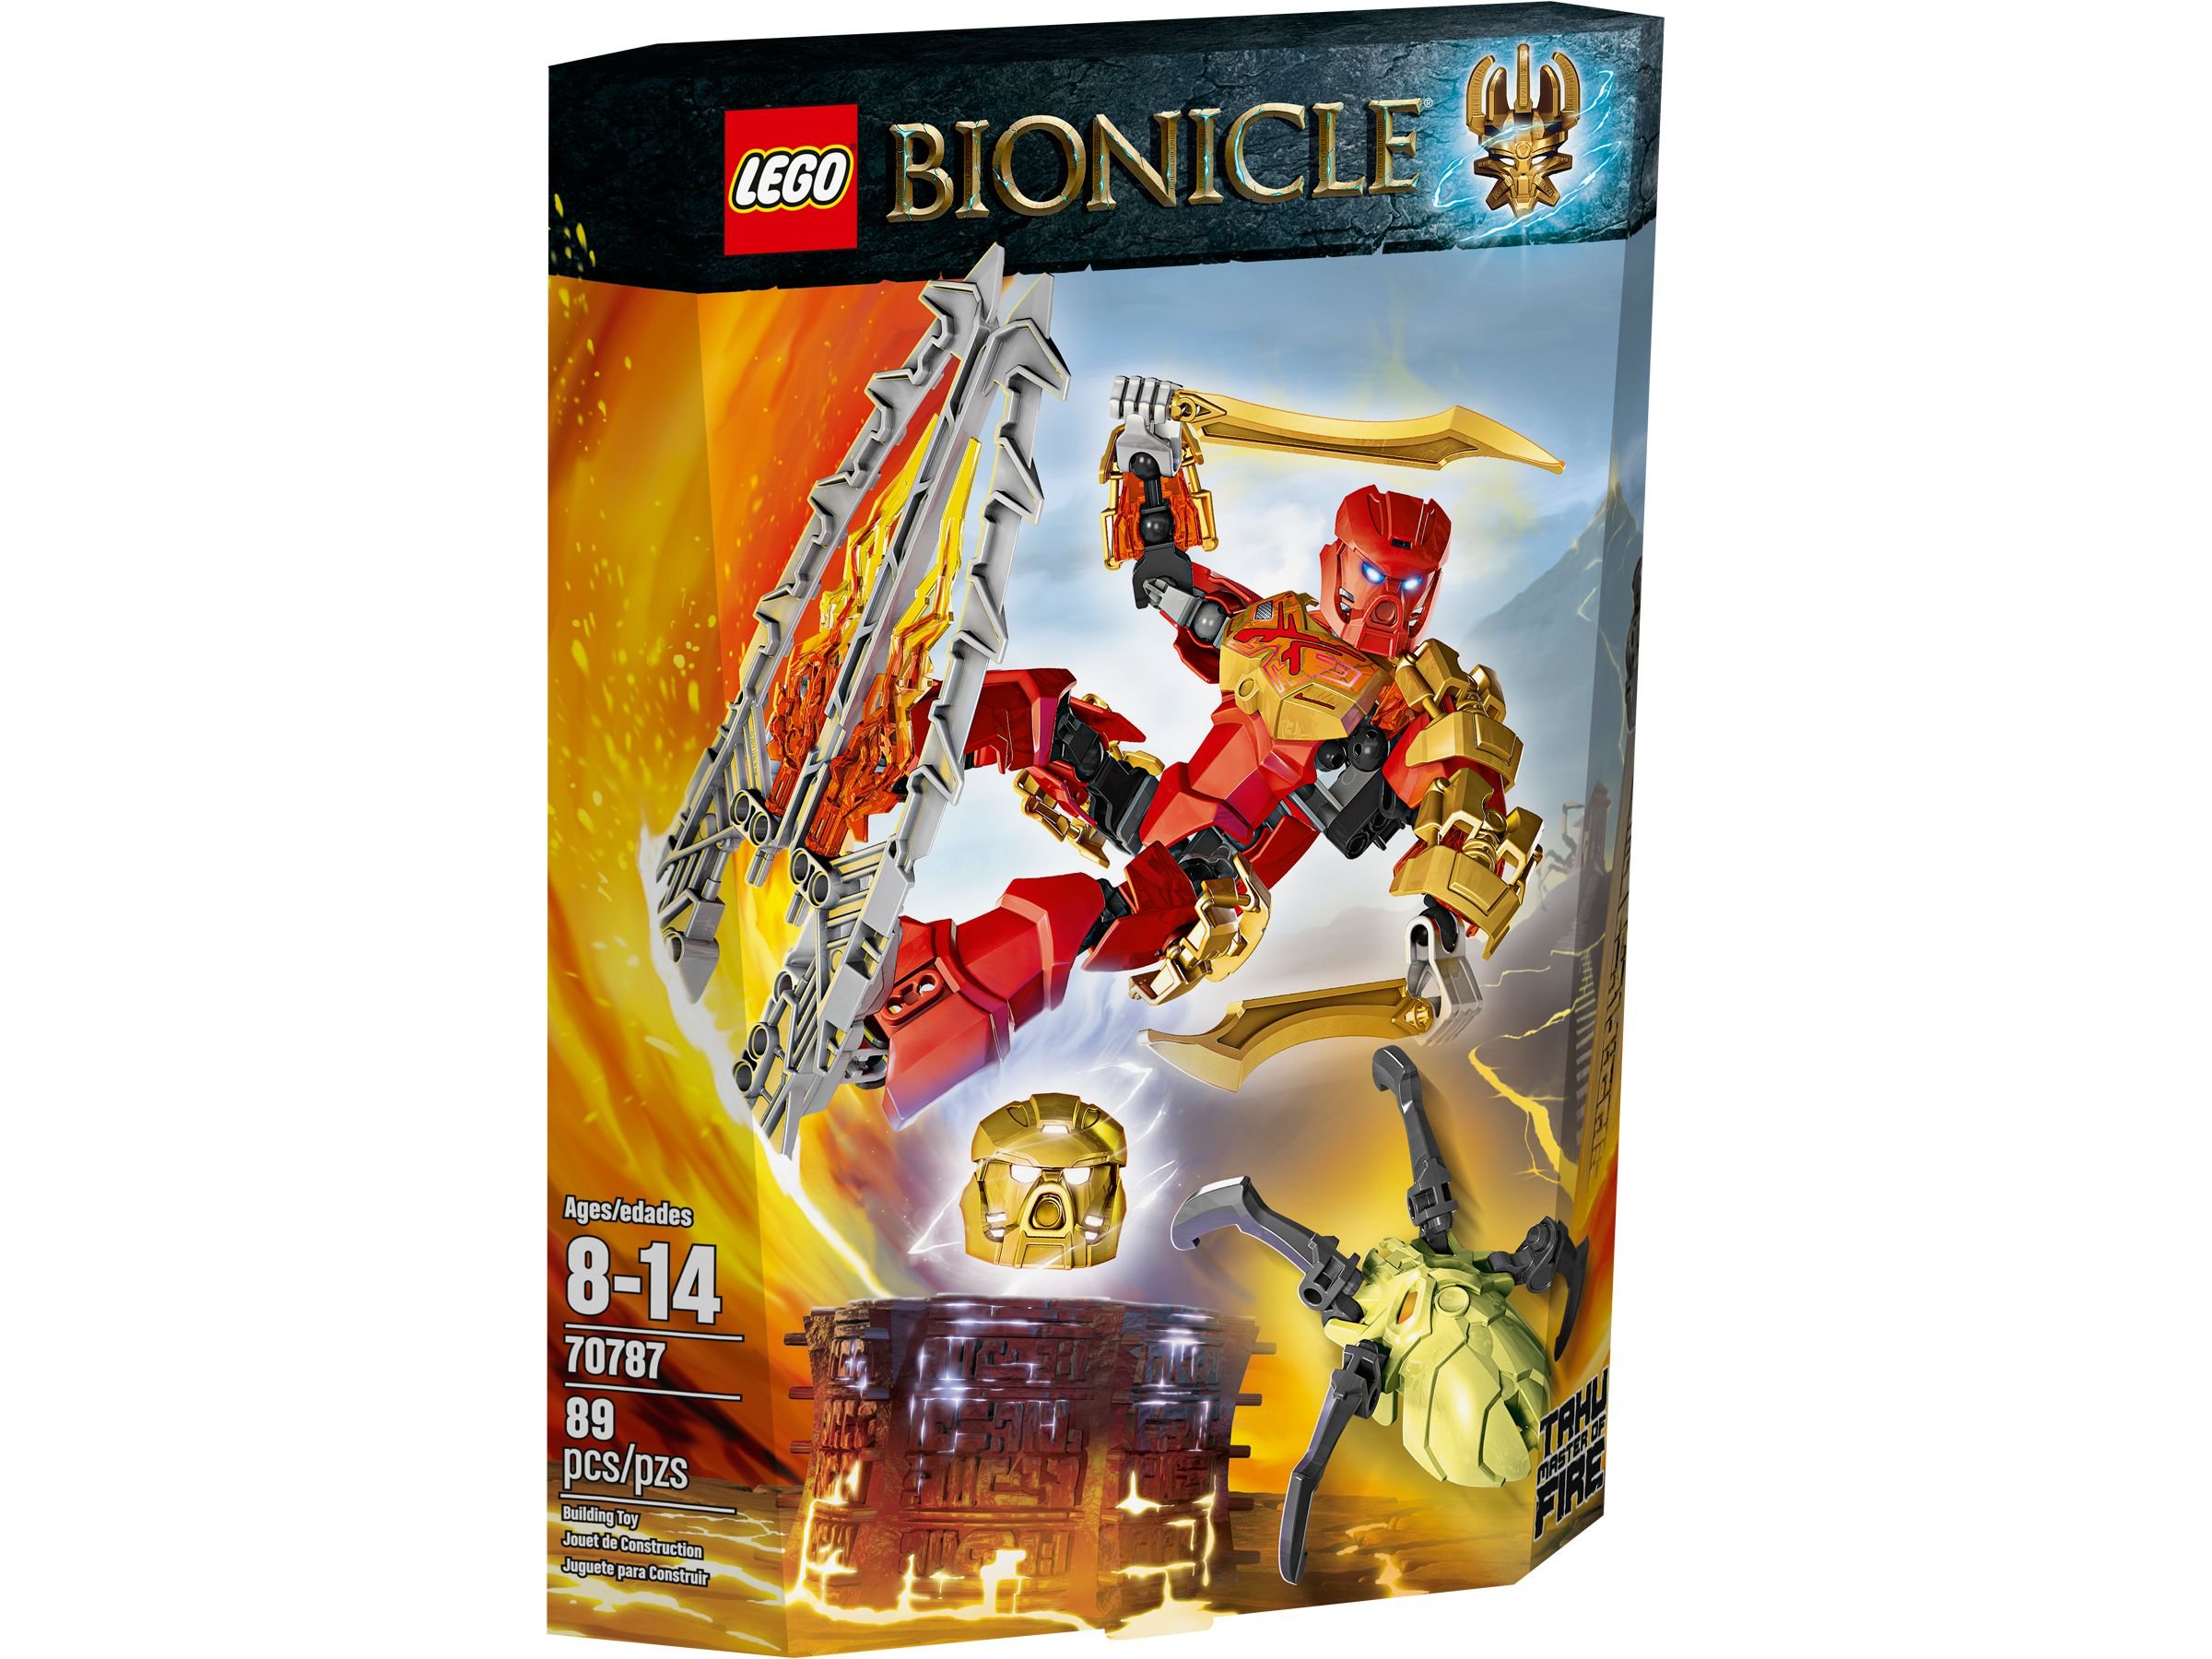 LEGO Bionicle 70787 Tahu – Meister des Feuers LEGO_70787_alt1.jpg